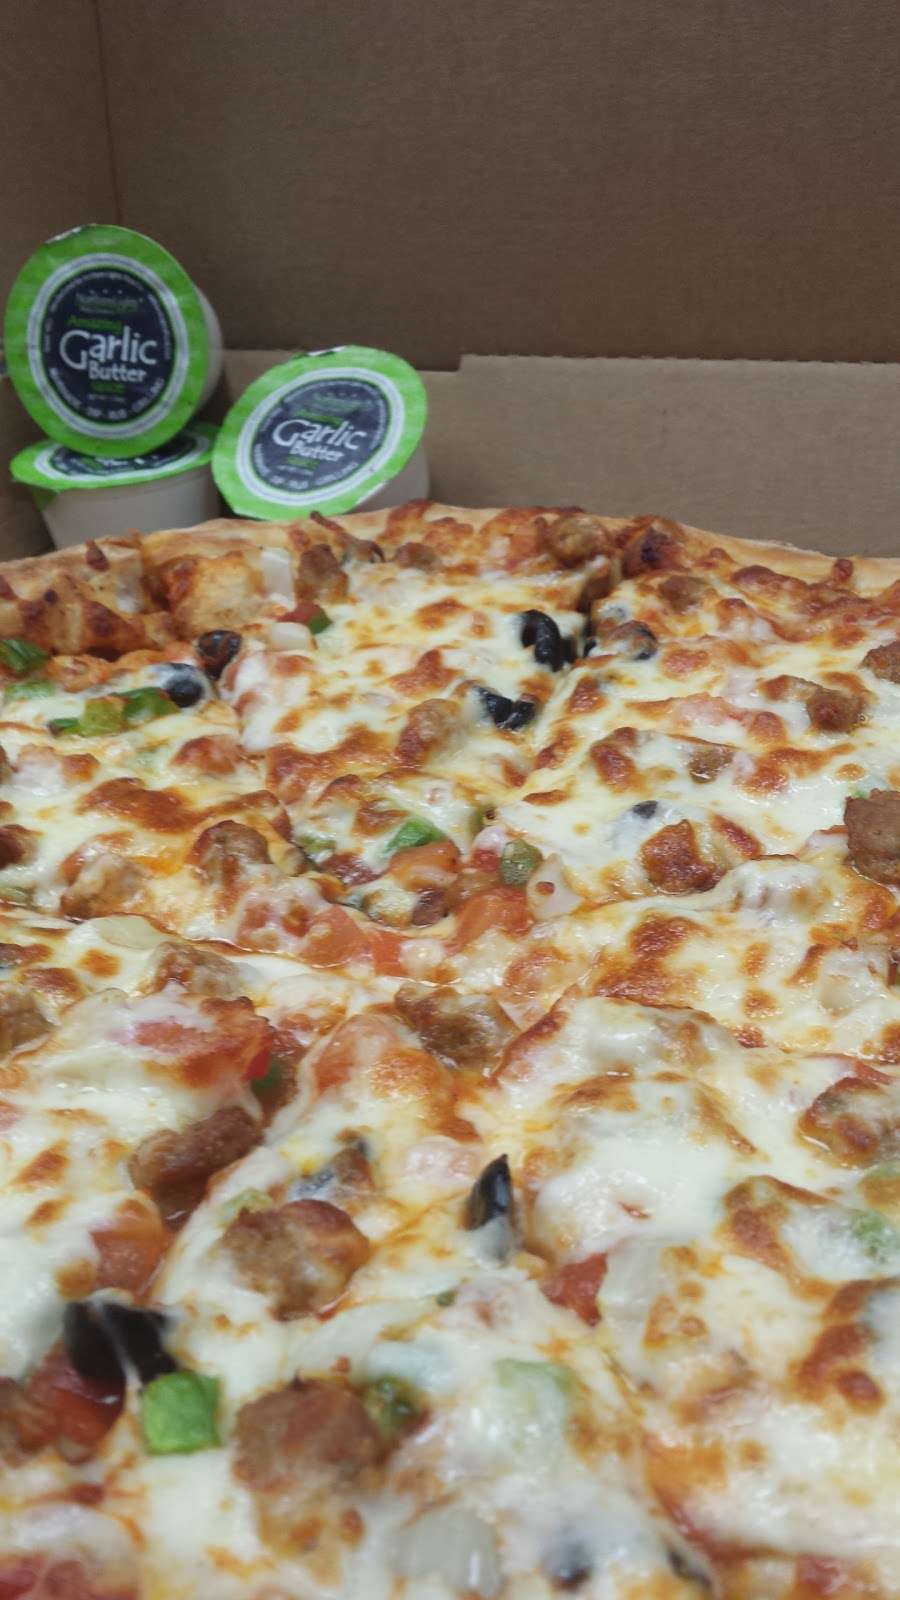 NorthernLights Pizza | 7711 NW Prairie View Rd, Kansas City, MO 64151 | Phone: (816) 587-5050